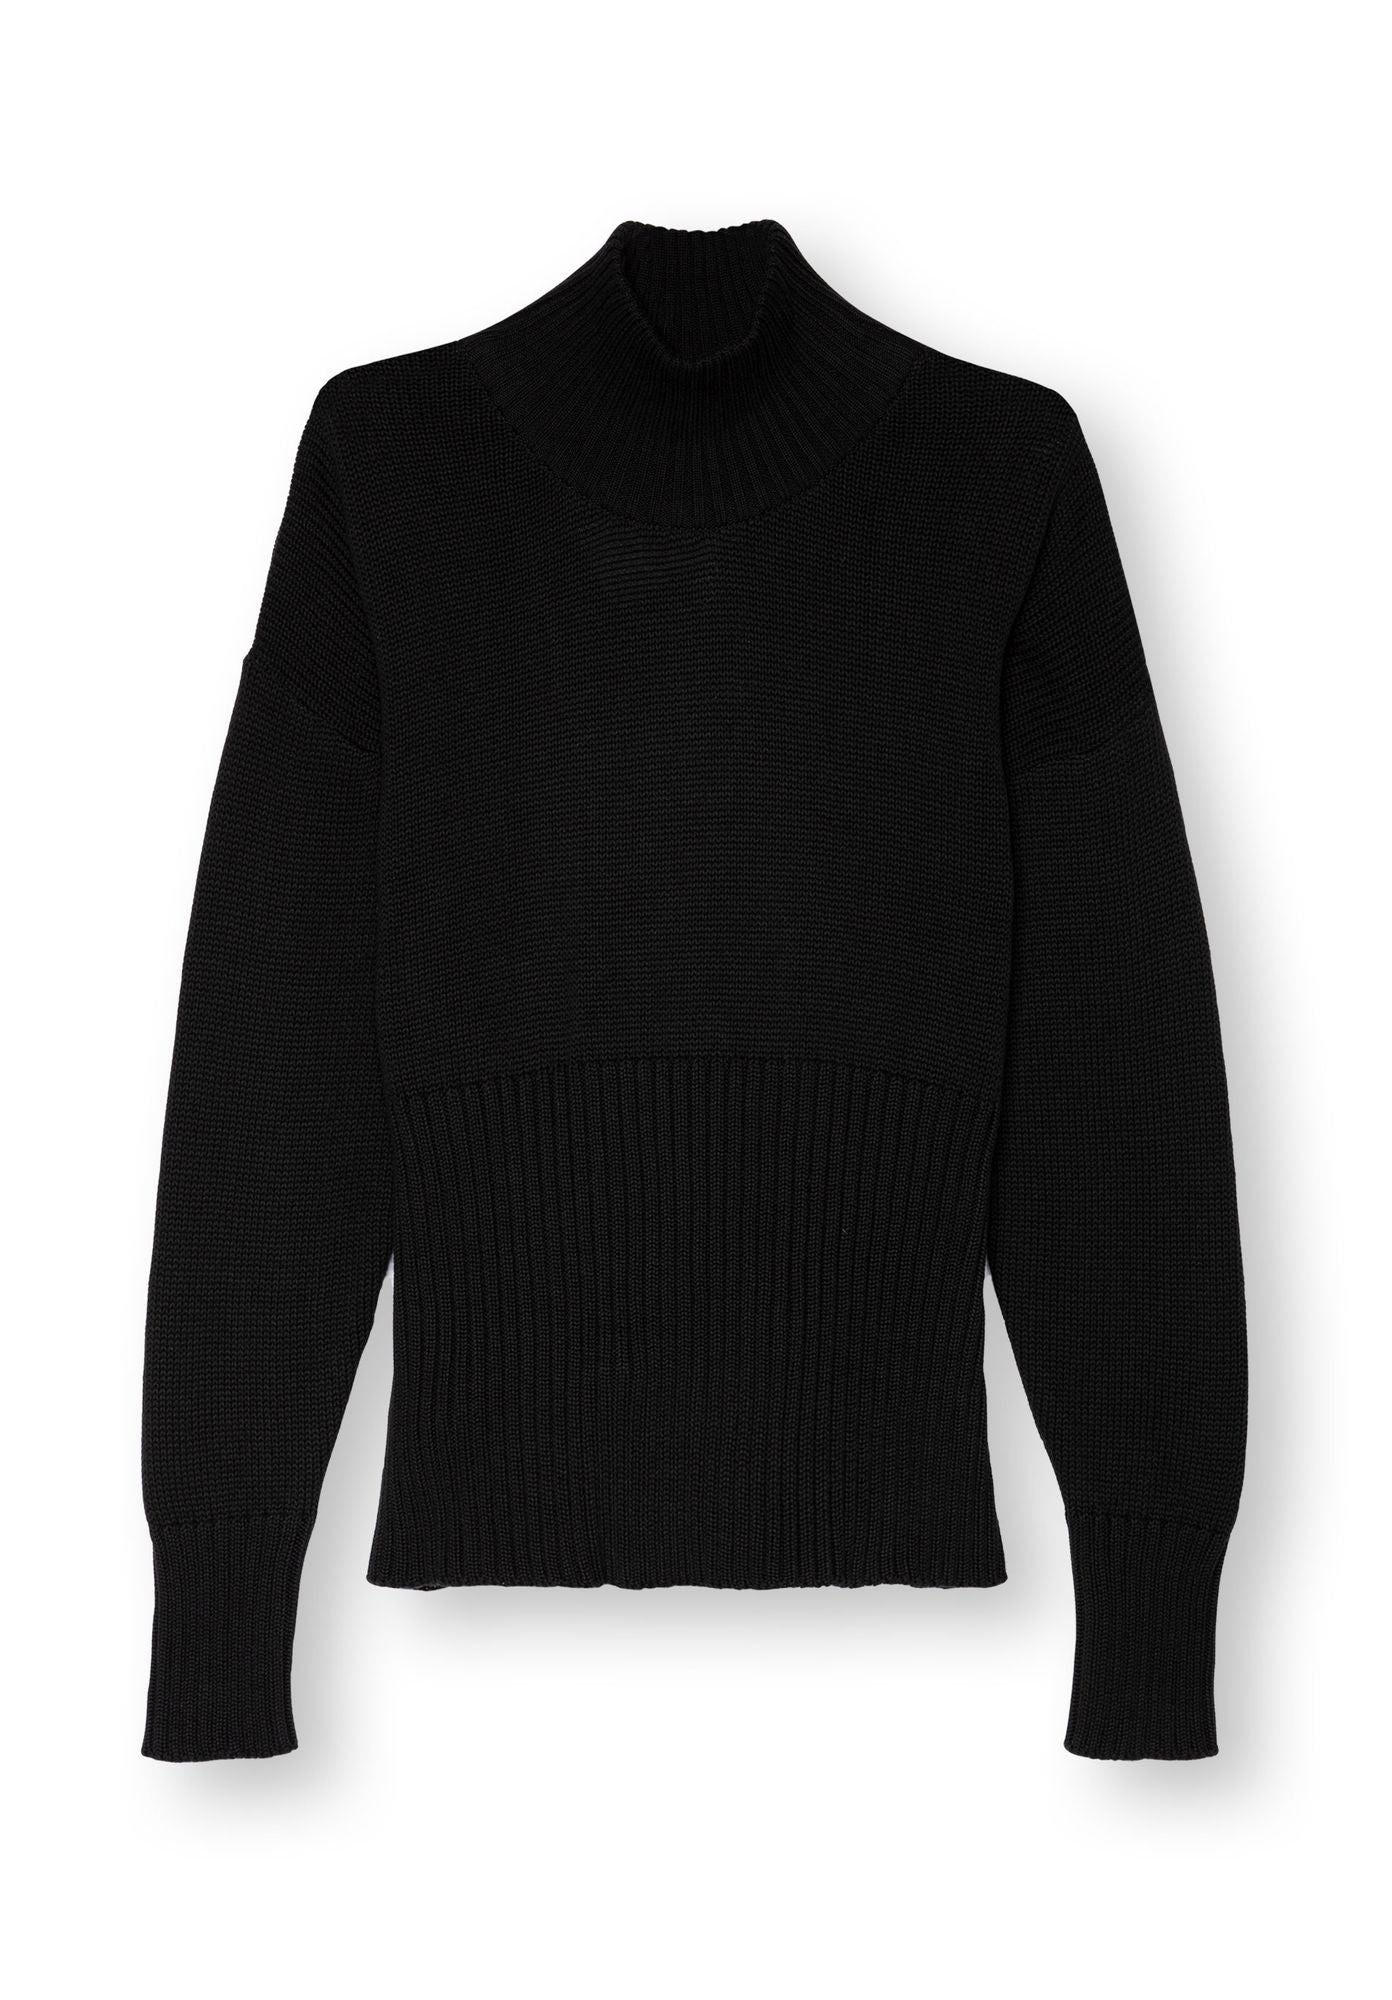 Turtleneck sweater in black made of organic cotton by ThokkThokk (S)